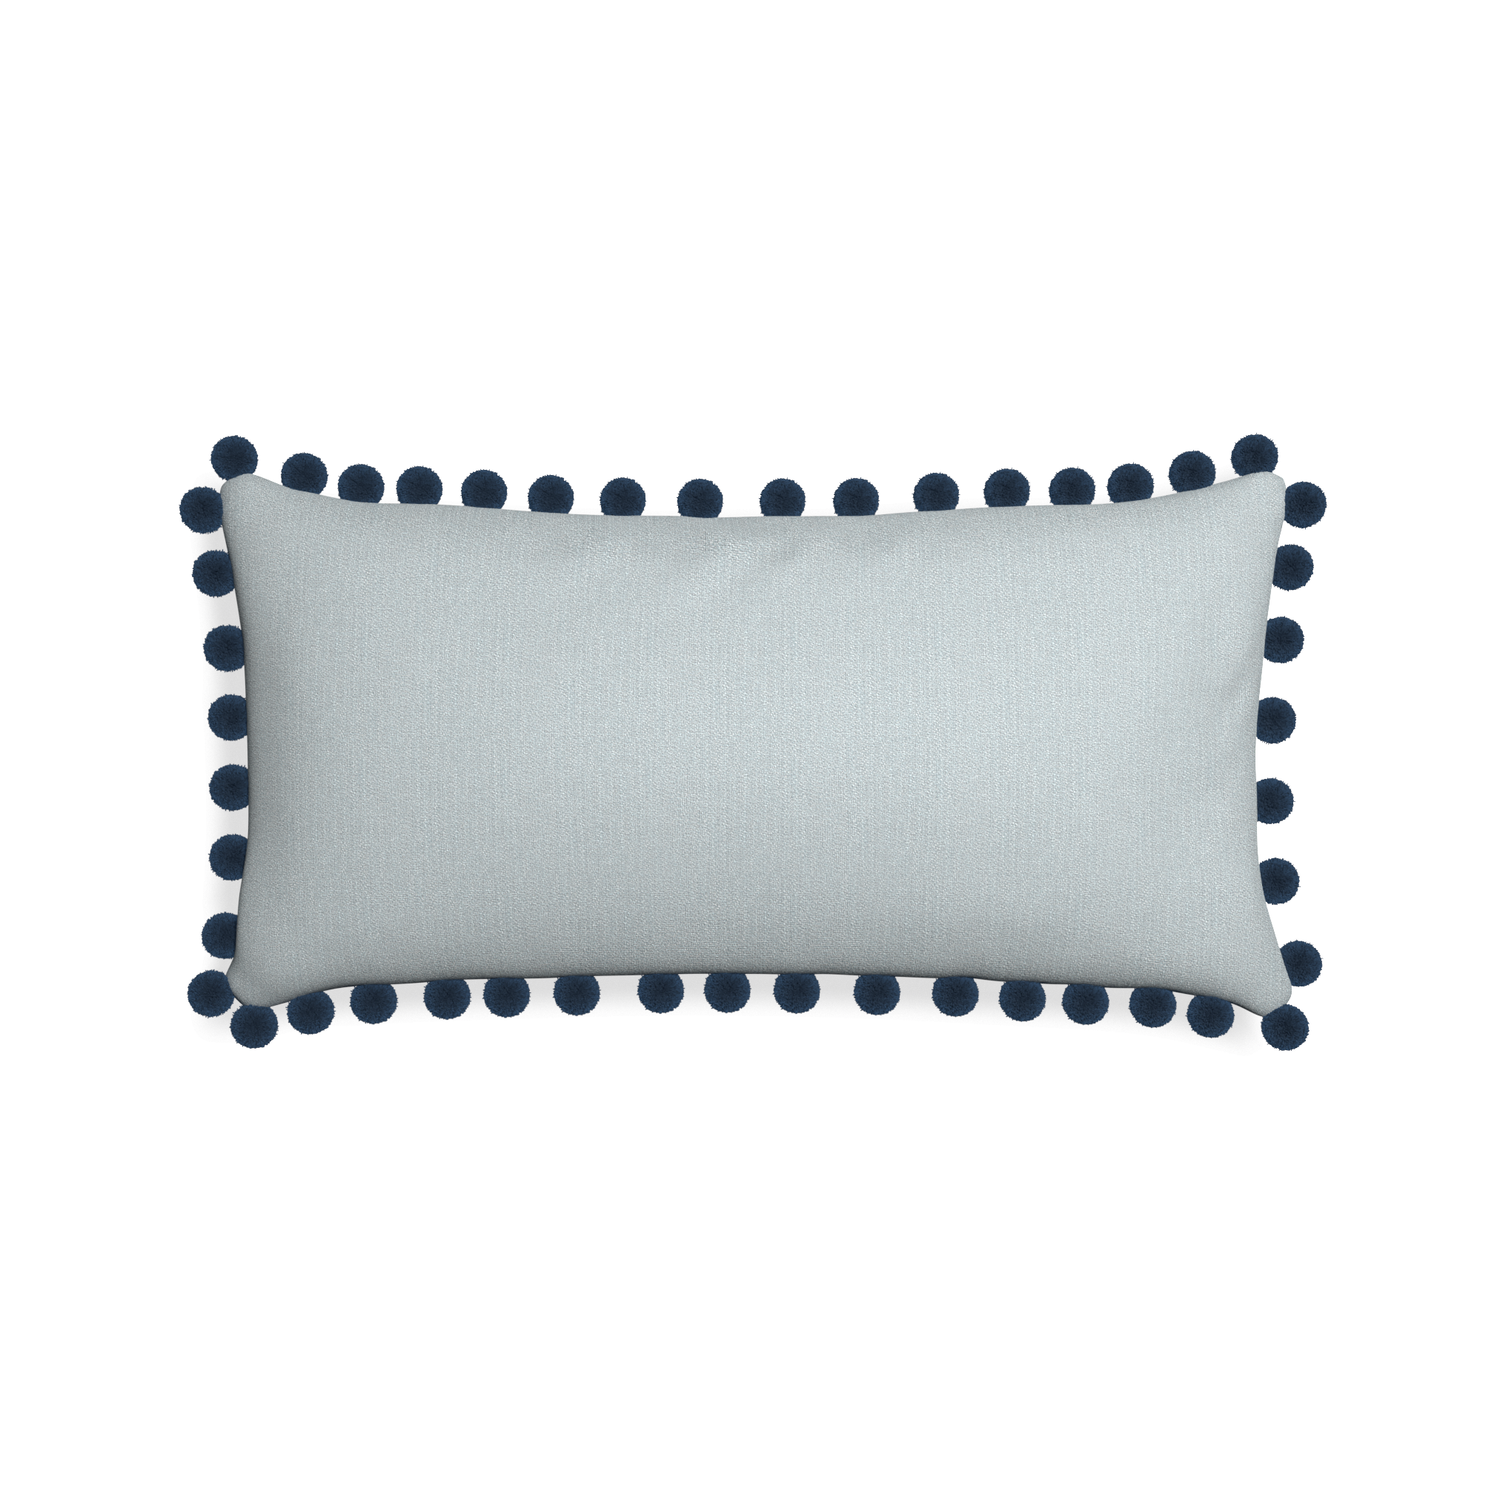 Midi-lumbar sea custom grey bluepillow with c on white background